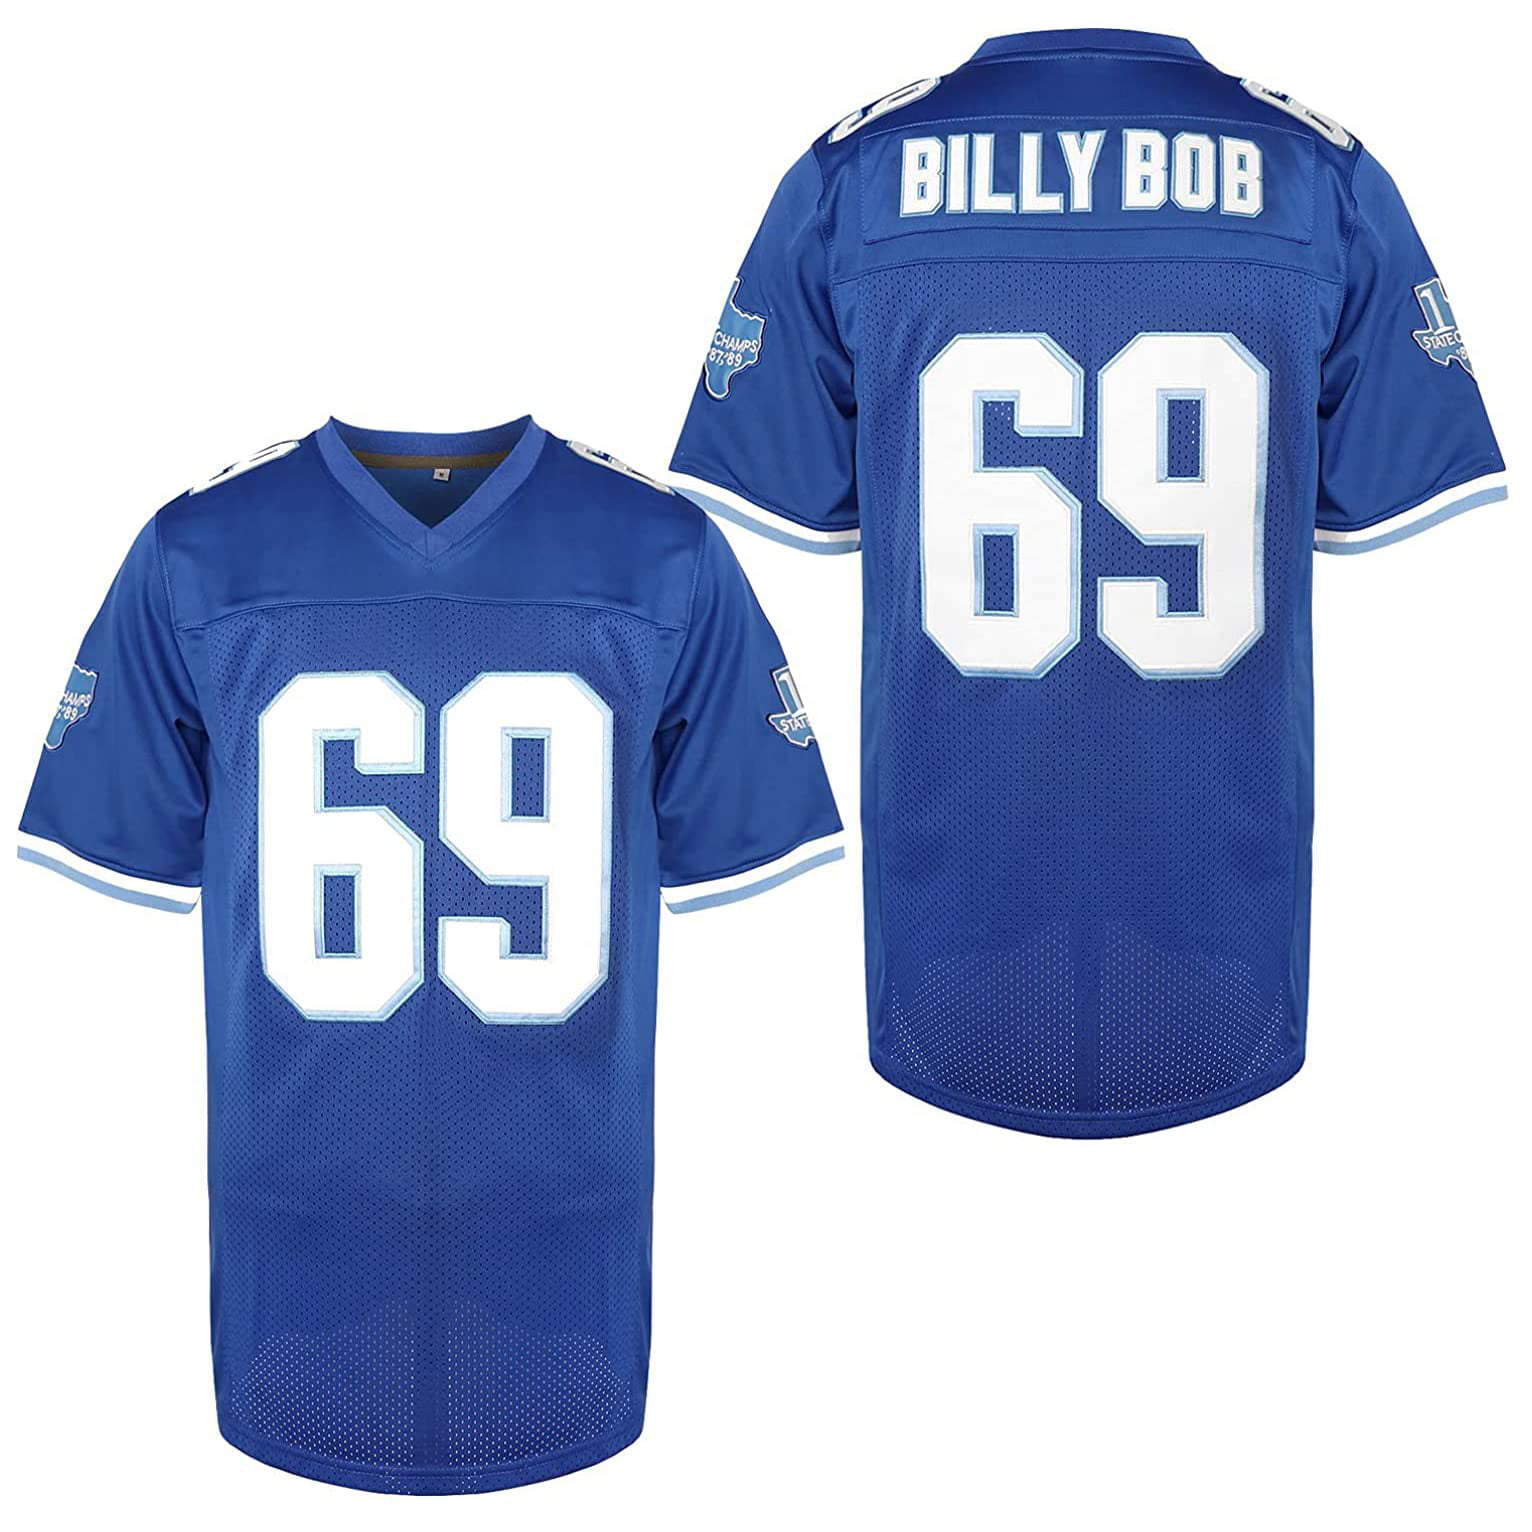 Men's 7 Harbor Varsity Blues Movie Football Jersey Stitched Sport Shirt Blue 7, S 